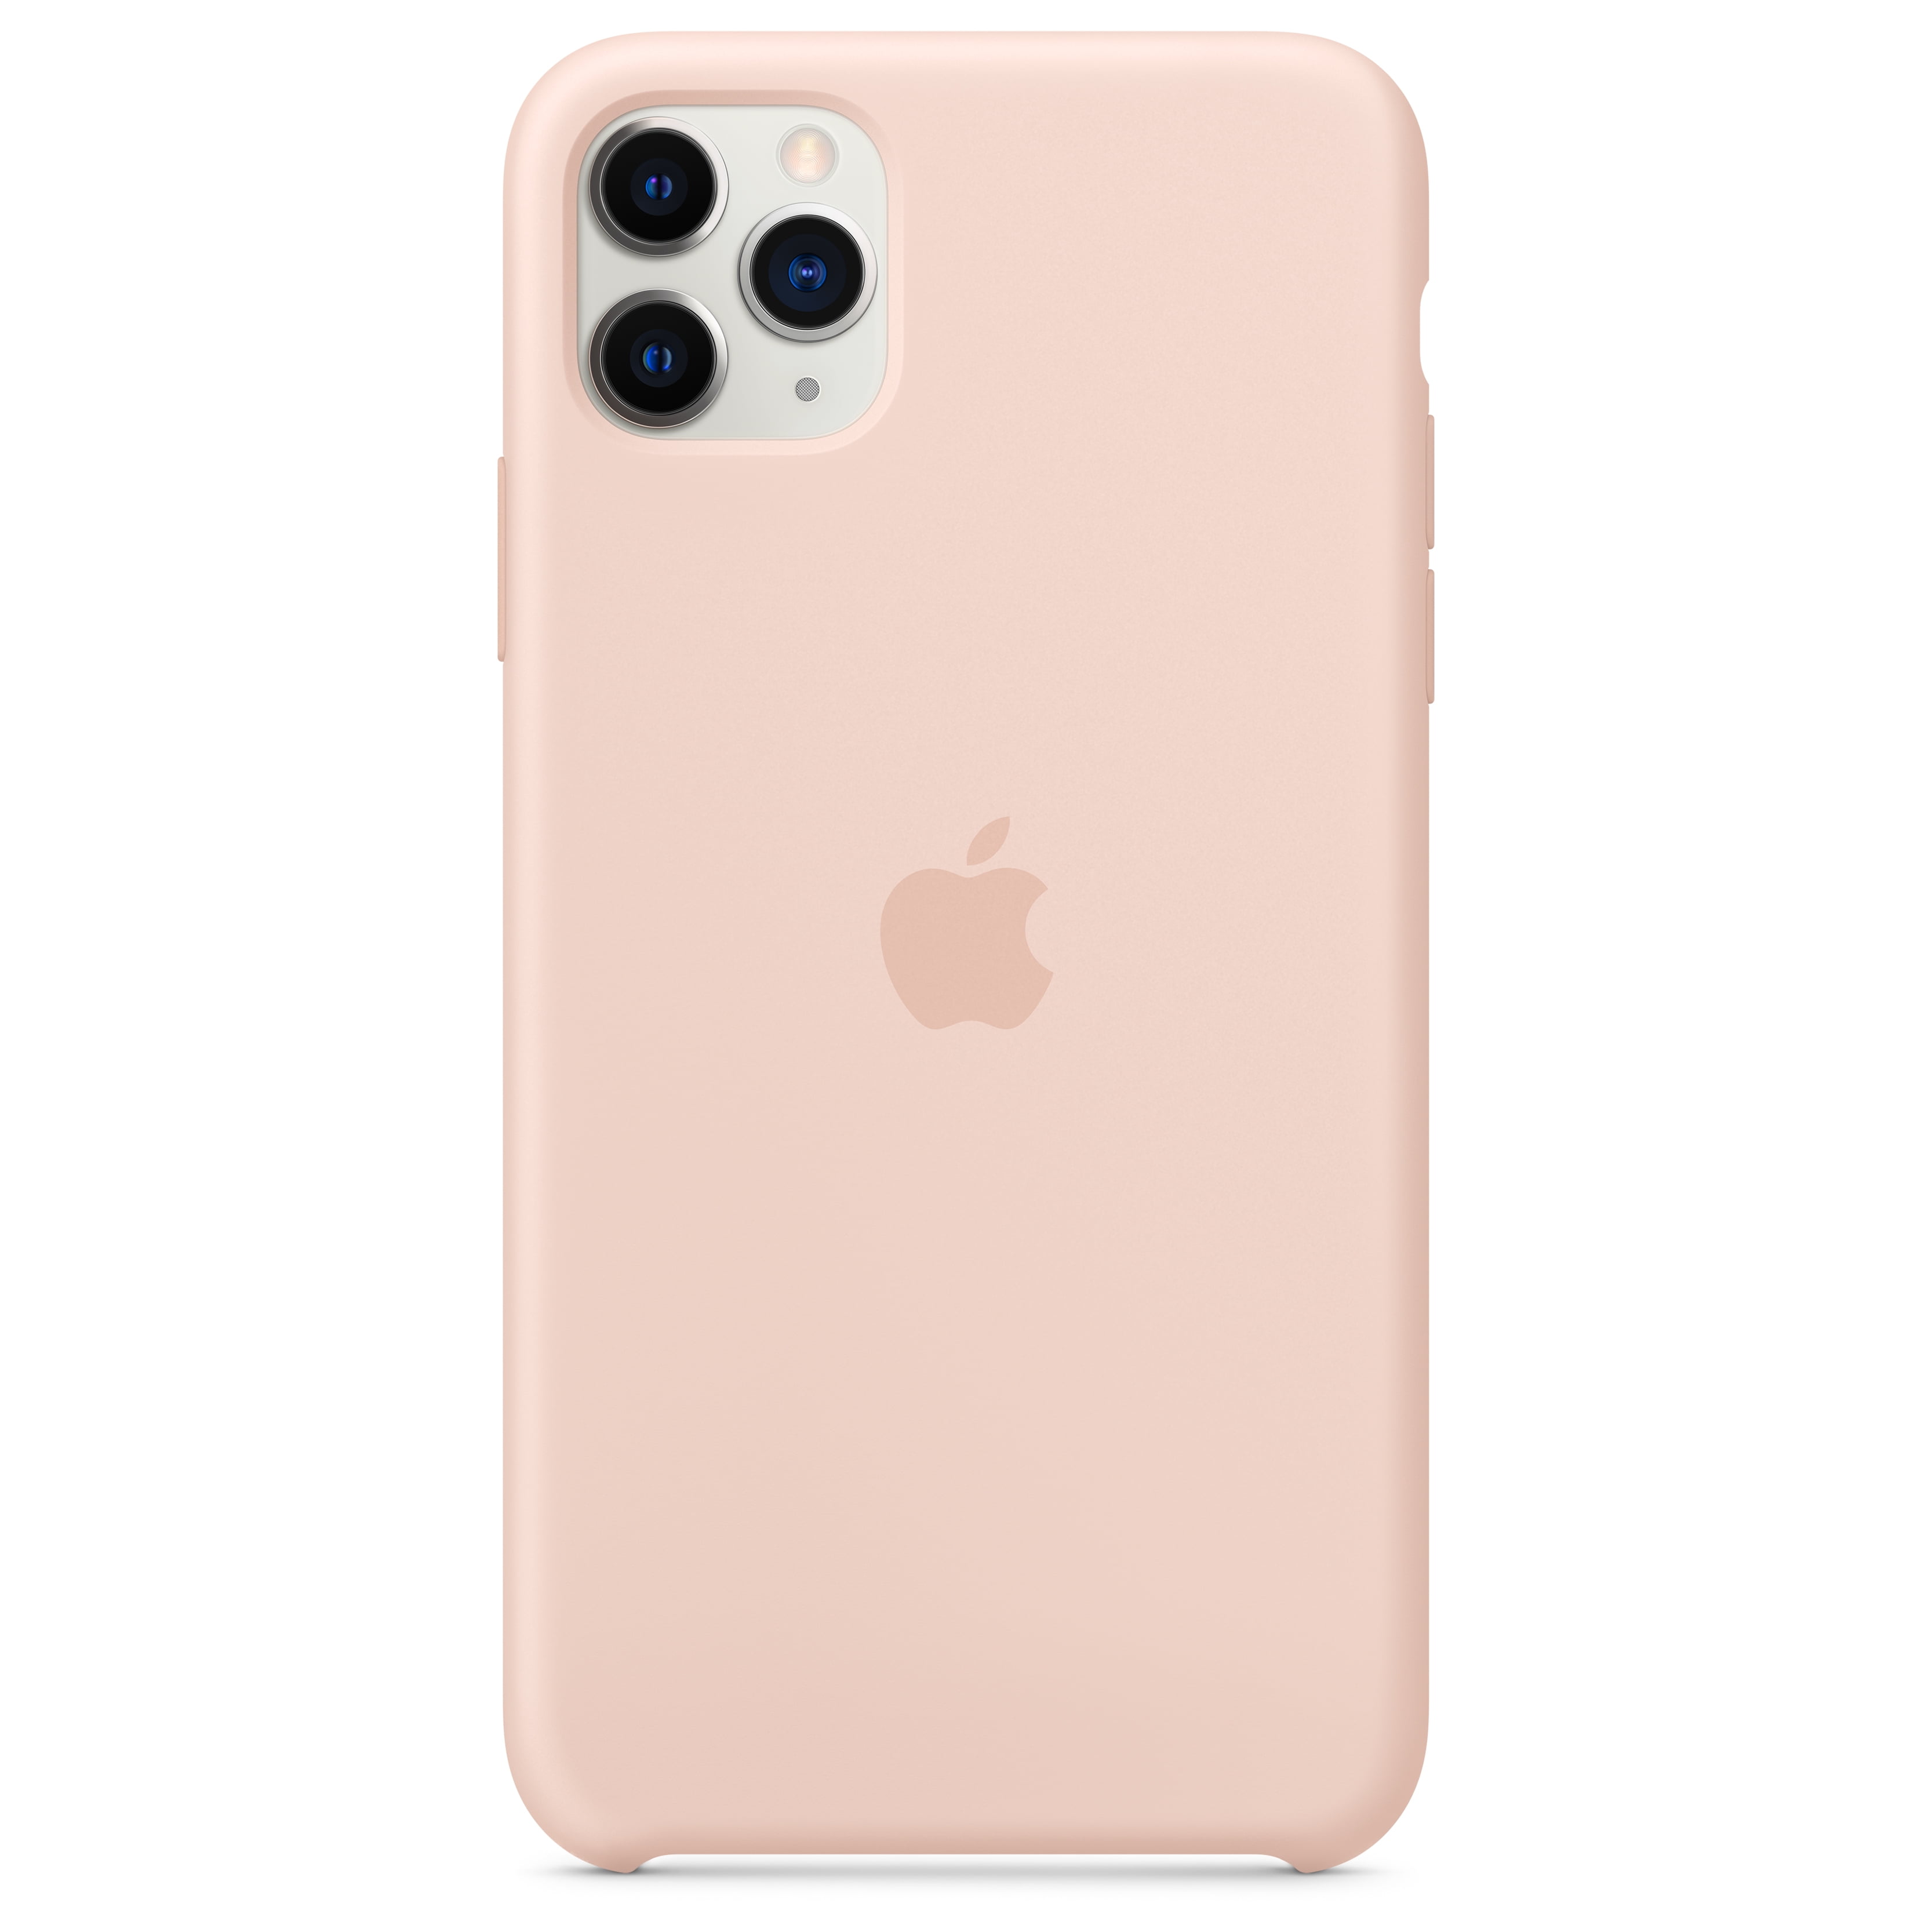 Iphone 11 Pro Max Silicone Case Pink Sand Walmart Com